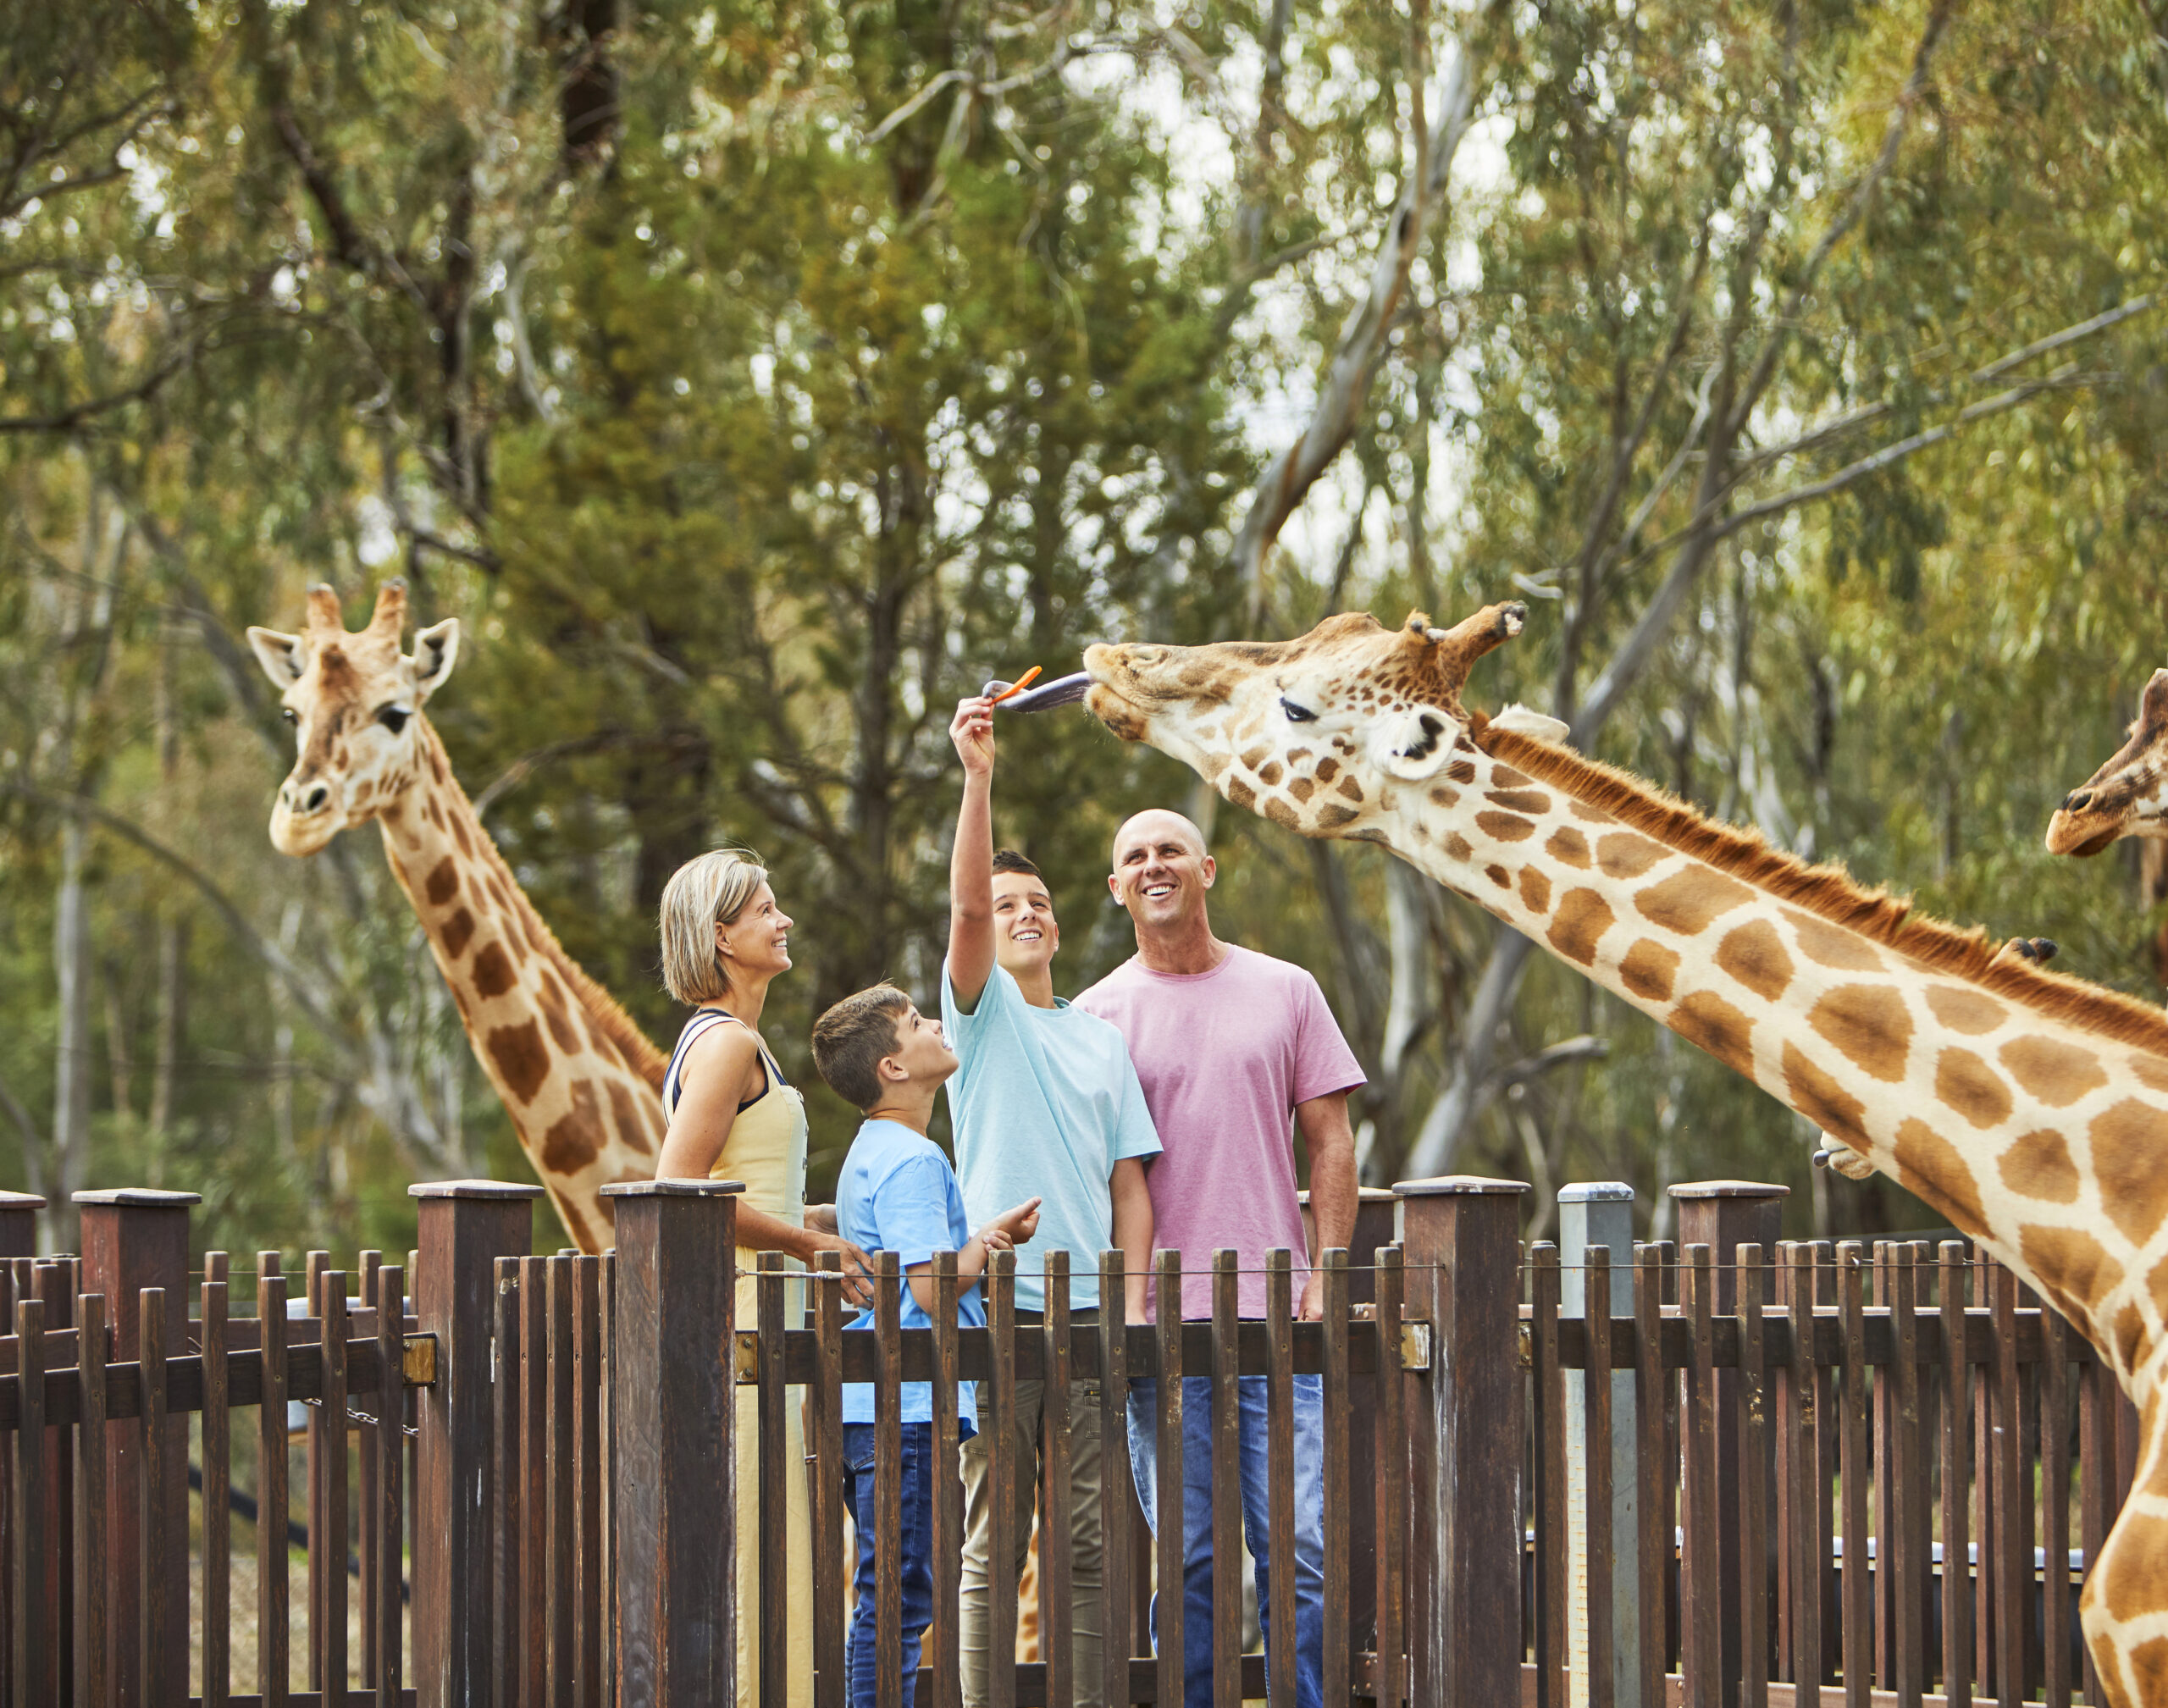 A family enjoying a giraffe encounter at Taronga Western Plains Zoo, Dubbo.